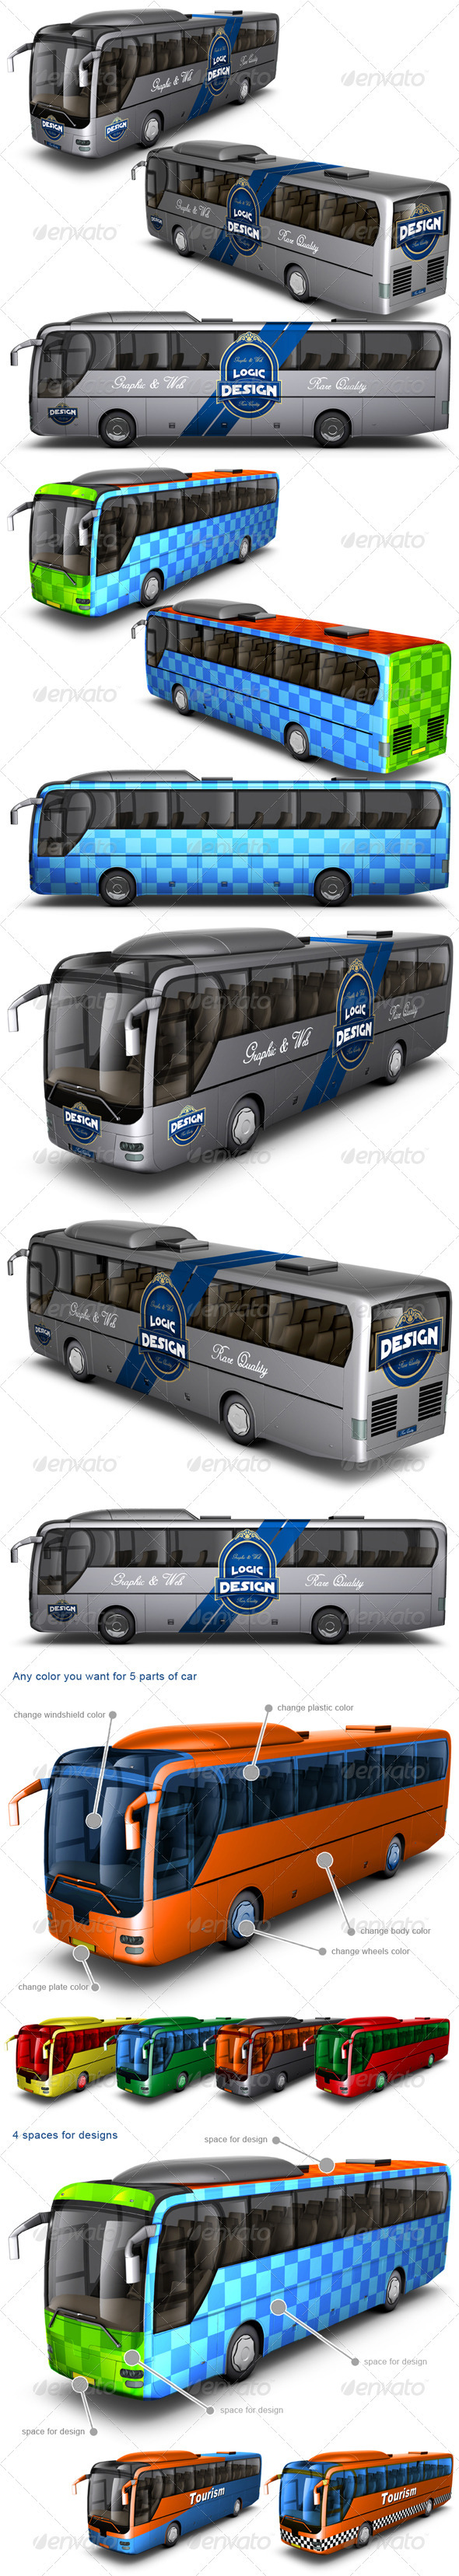 Download Bus Mock Up by Logic_Design | GraphicRiver